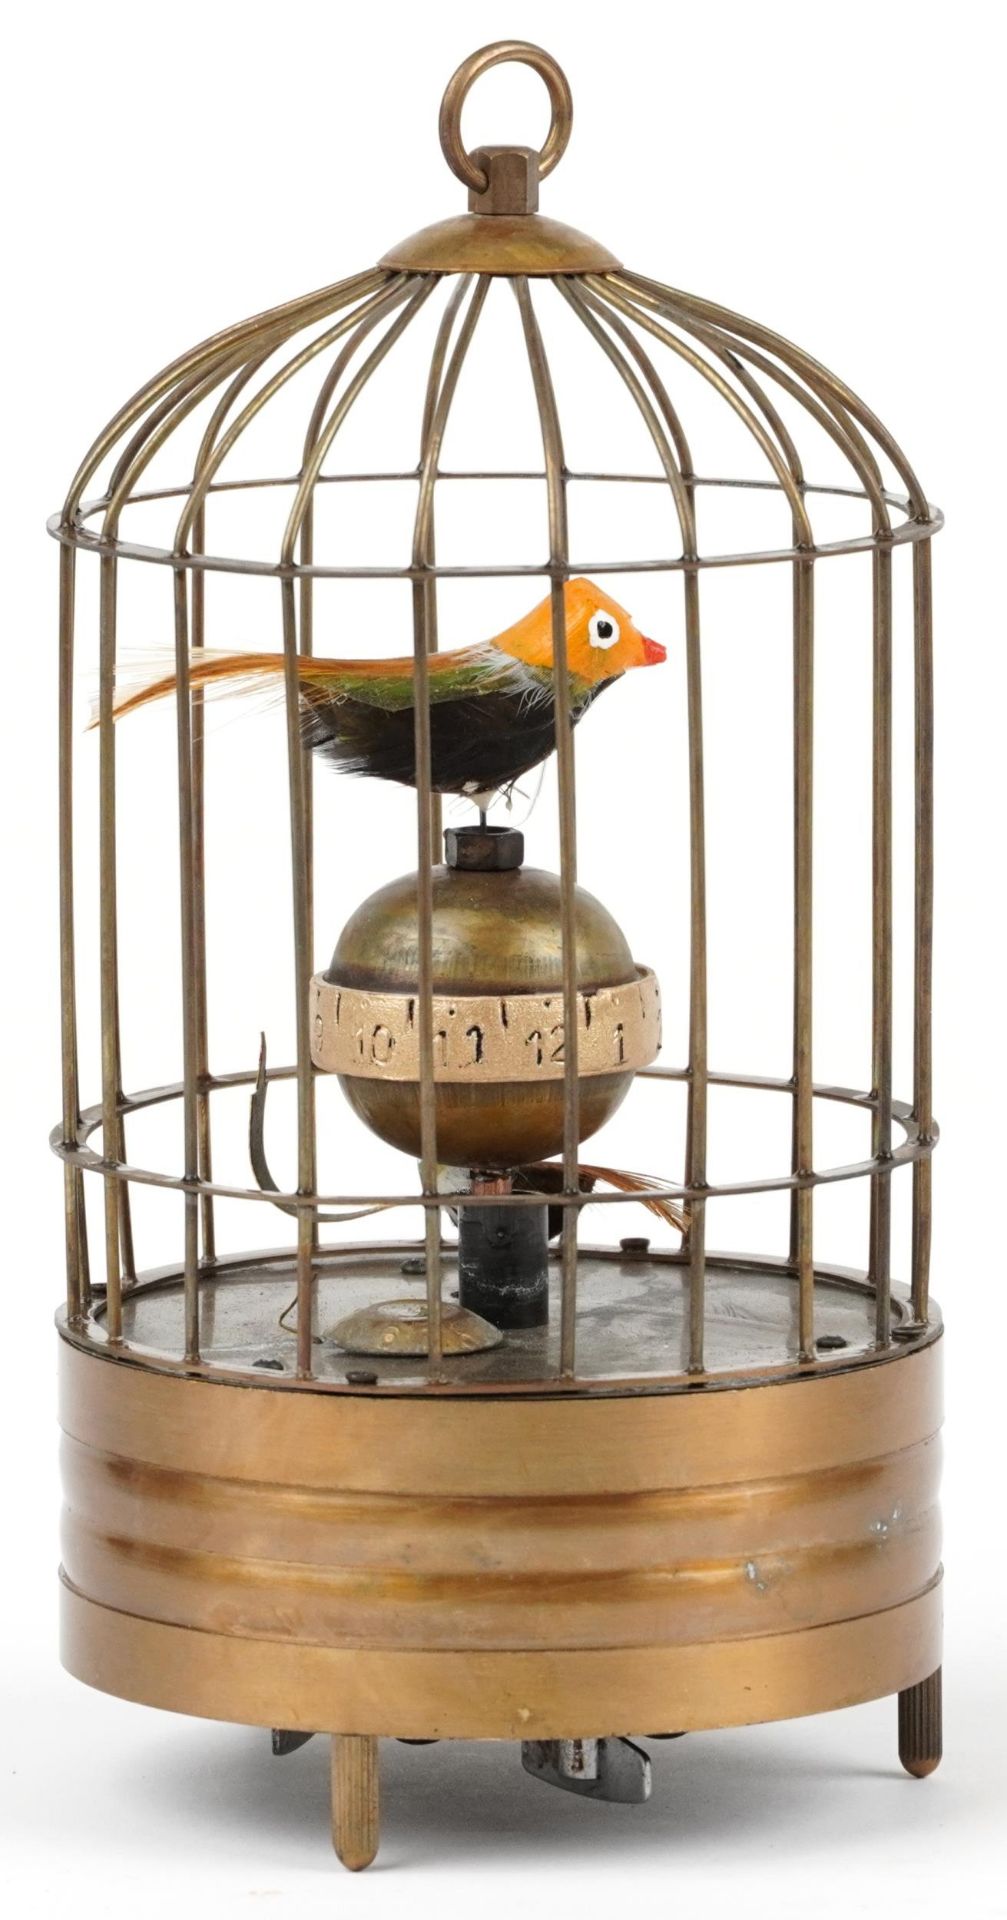 Clockwork automaton birdcage alarm clock, 19cm high - Image 2 of 3